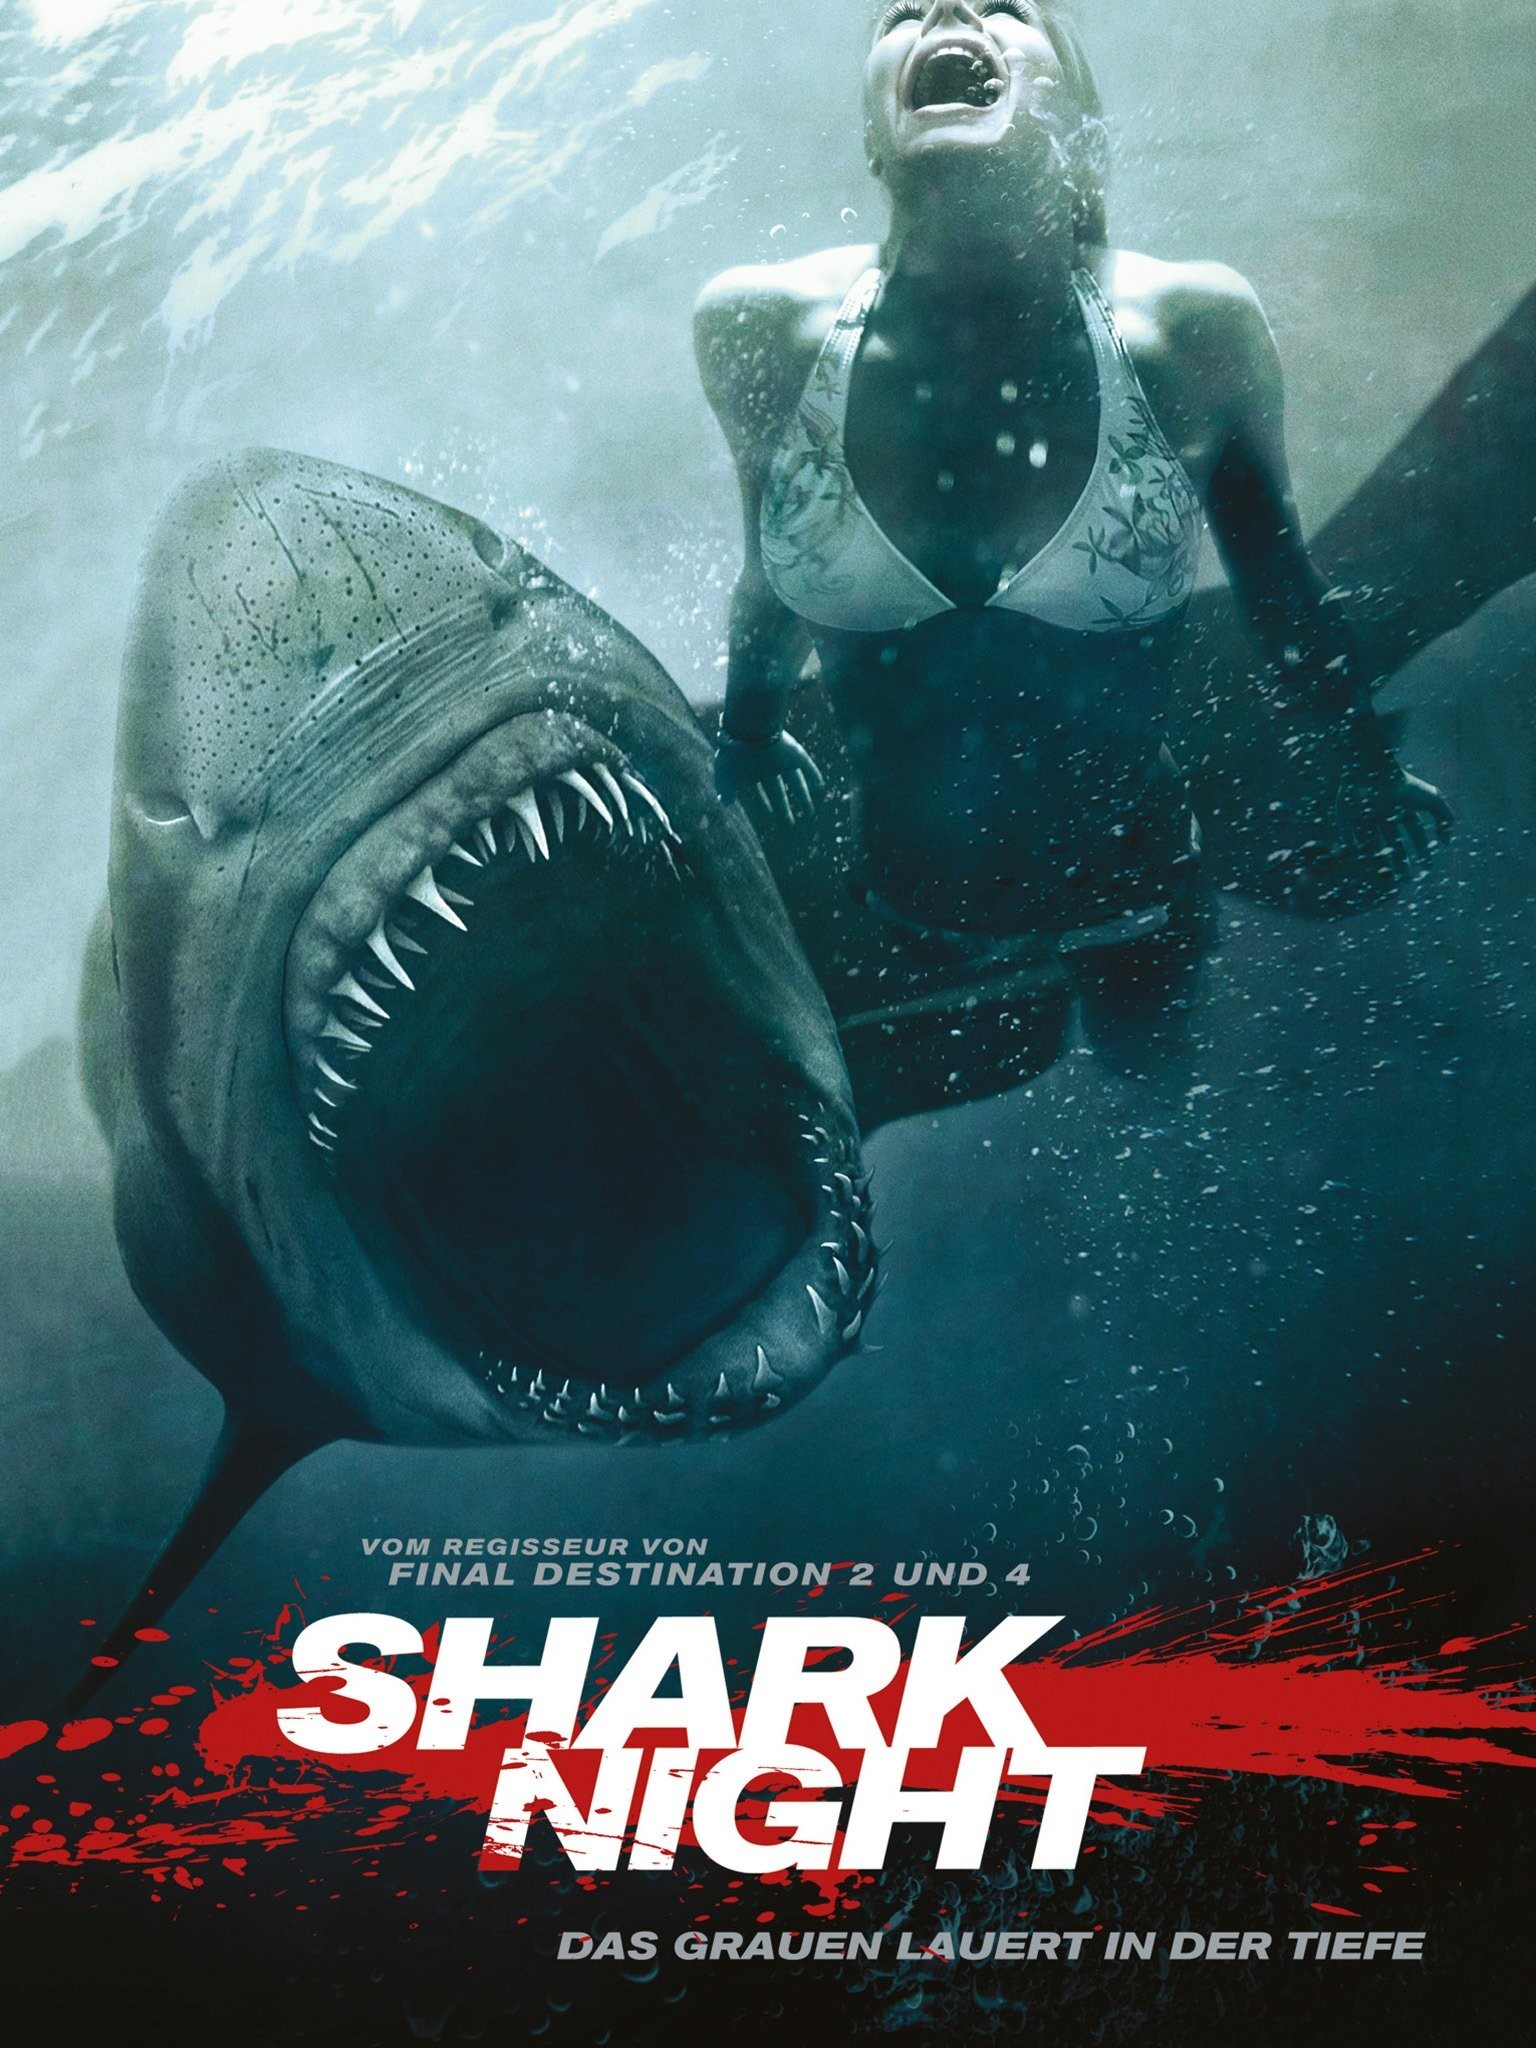 Plane Crash/Shark Movie From '47 Meters Down' Execs 'No Way Up